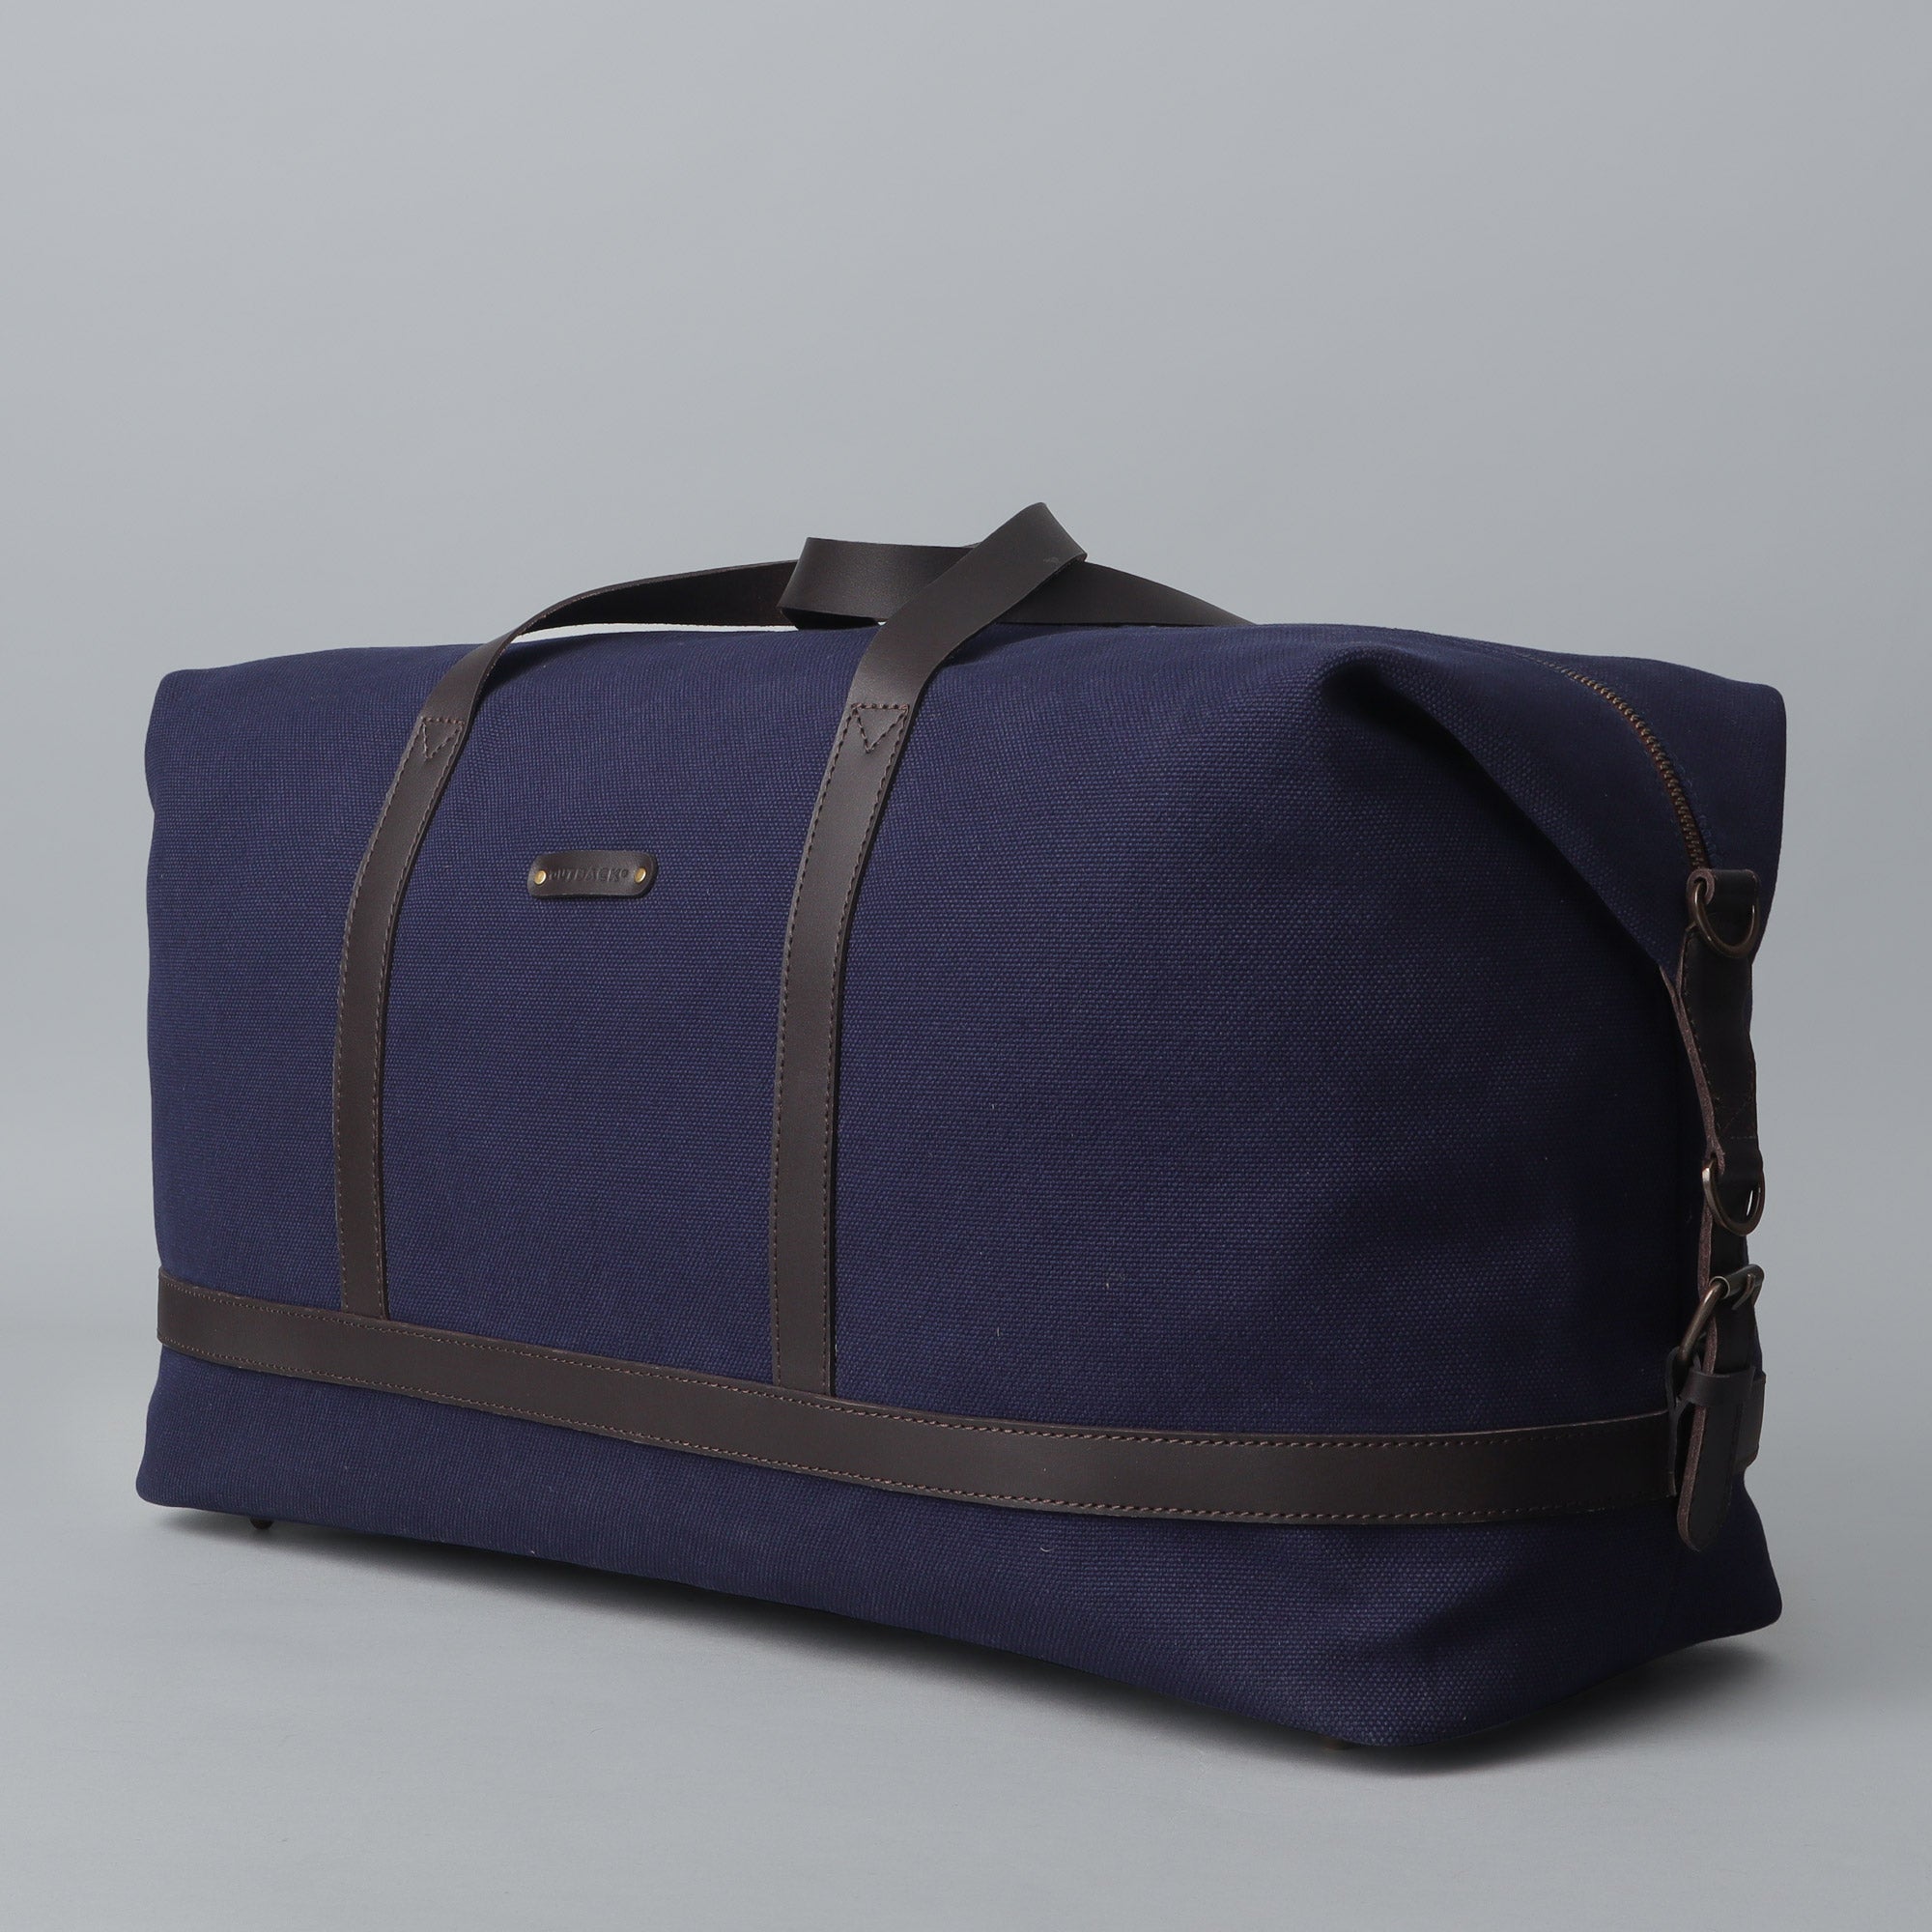 Buy Olive Green Travel Bags for Men by FUR JADEN Online | Ajio.com